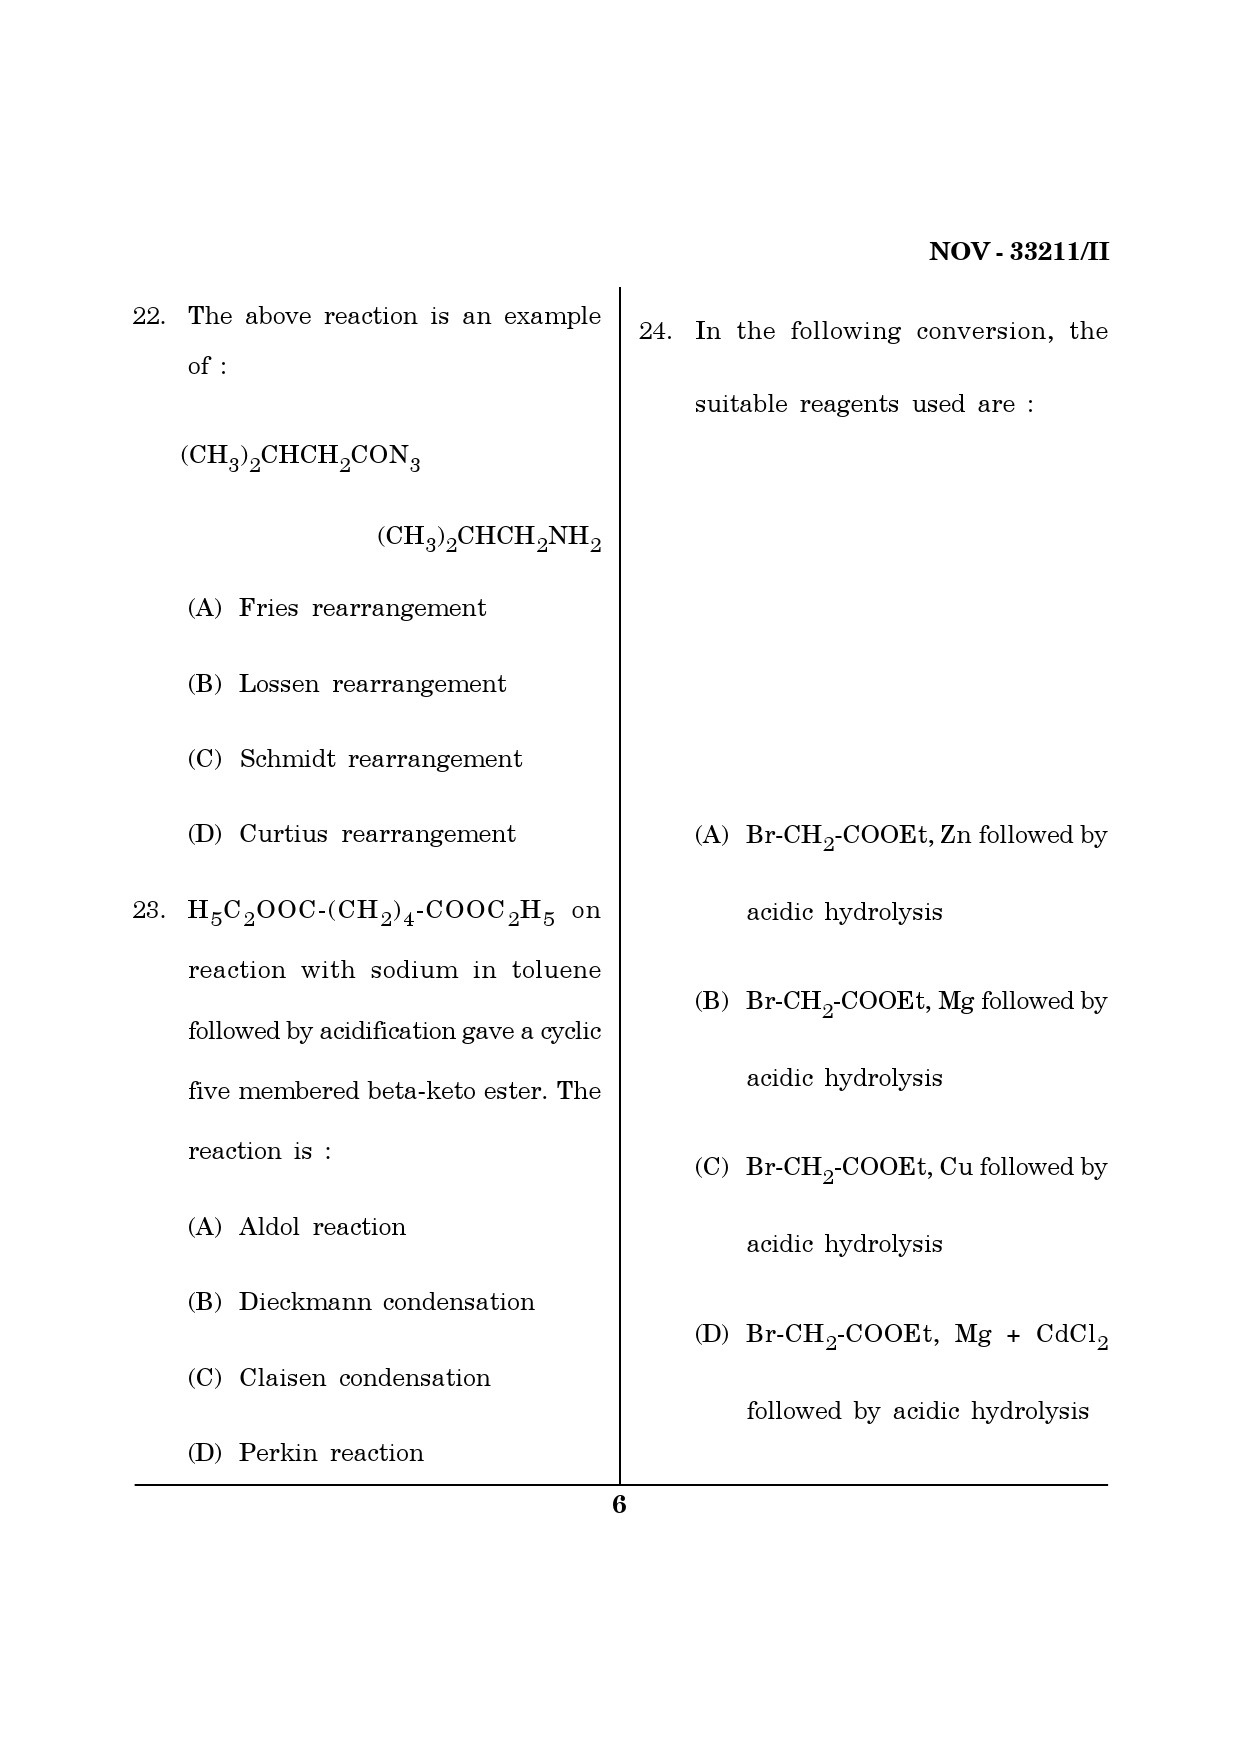 Maharashtra SET Chemical Sciences Question Paper II November 2011 6